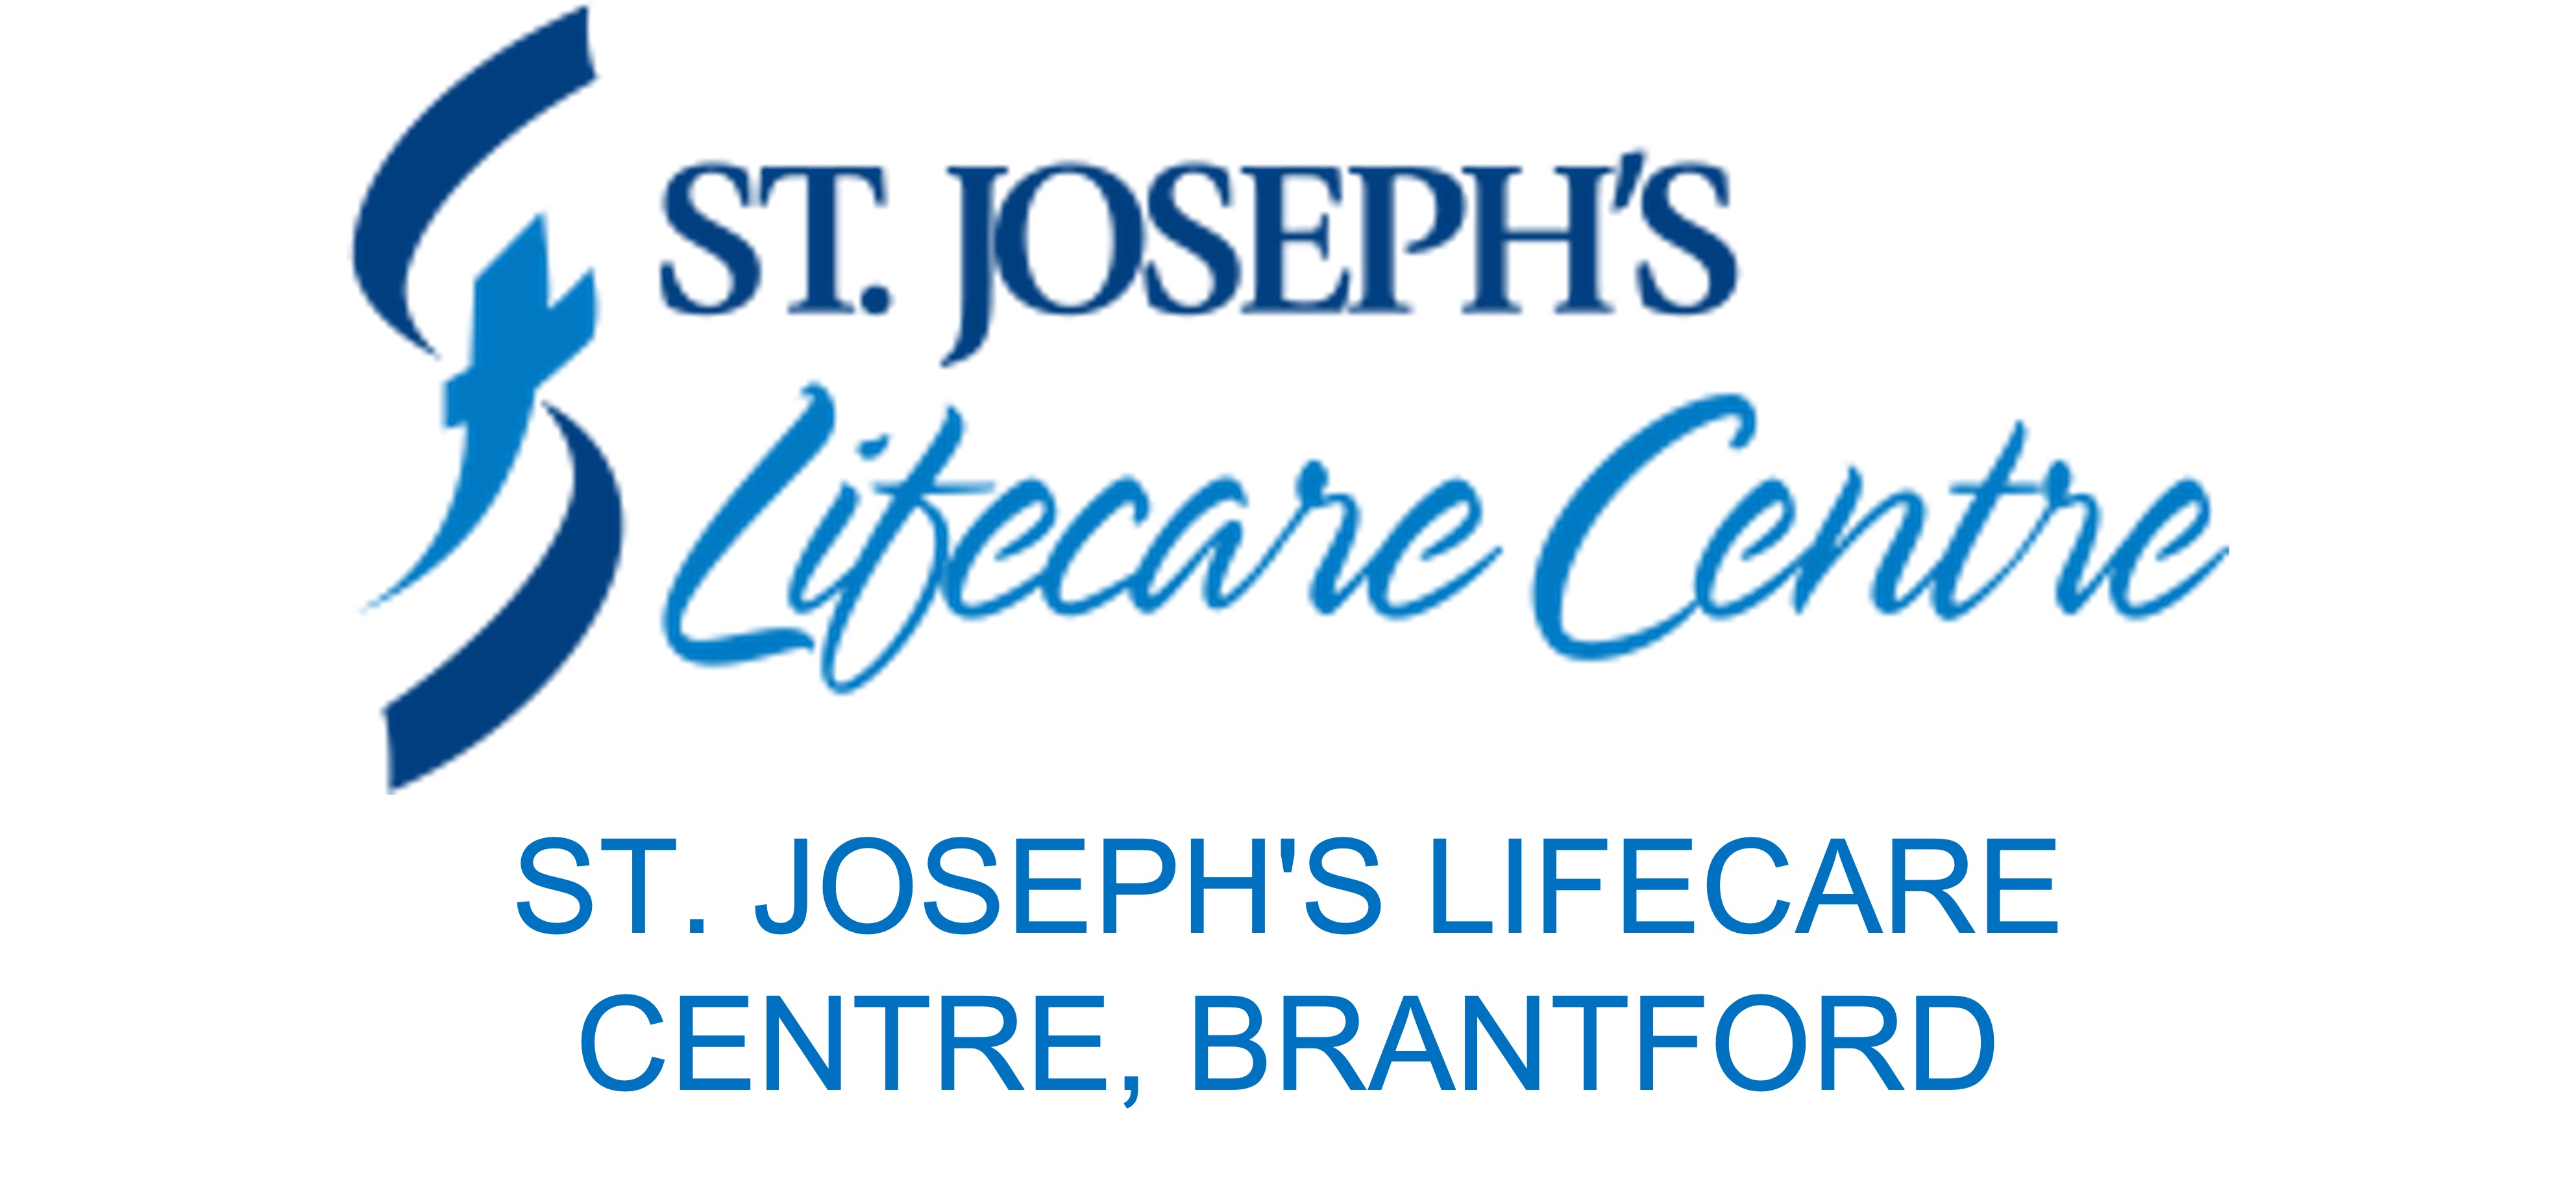 ST. JOSEPH'S LIFECARE CENTRE, BRANTFORD